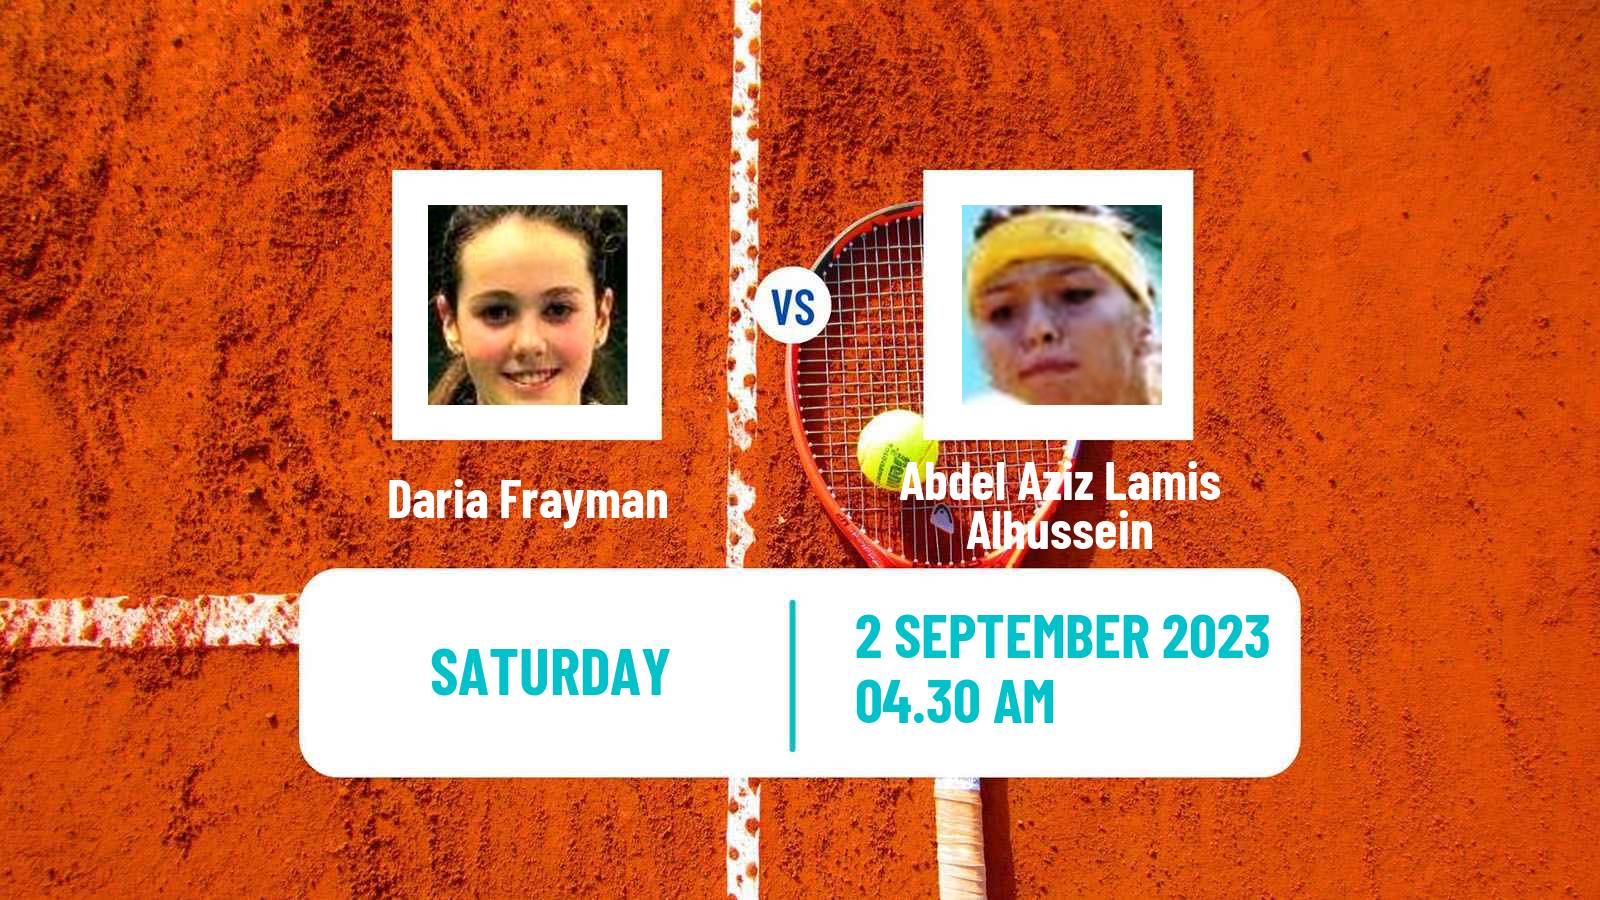 Tennis ITF W15 Monastir 30 Women Daria Frayman - Abdel Aziz Lamis Alhussein